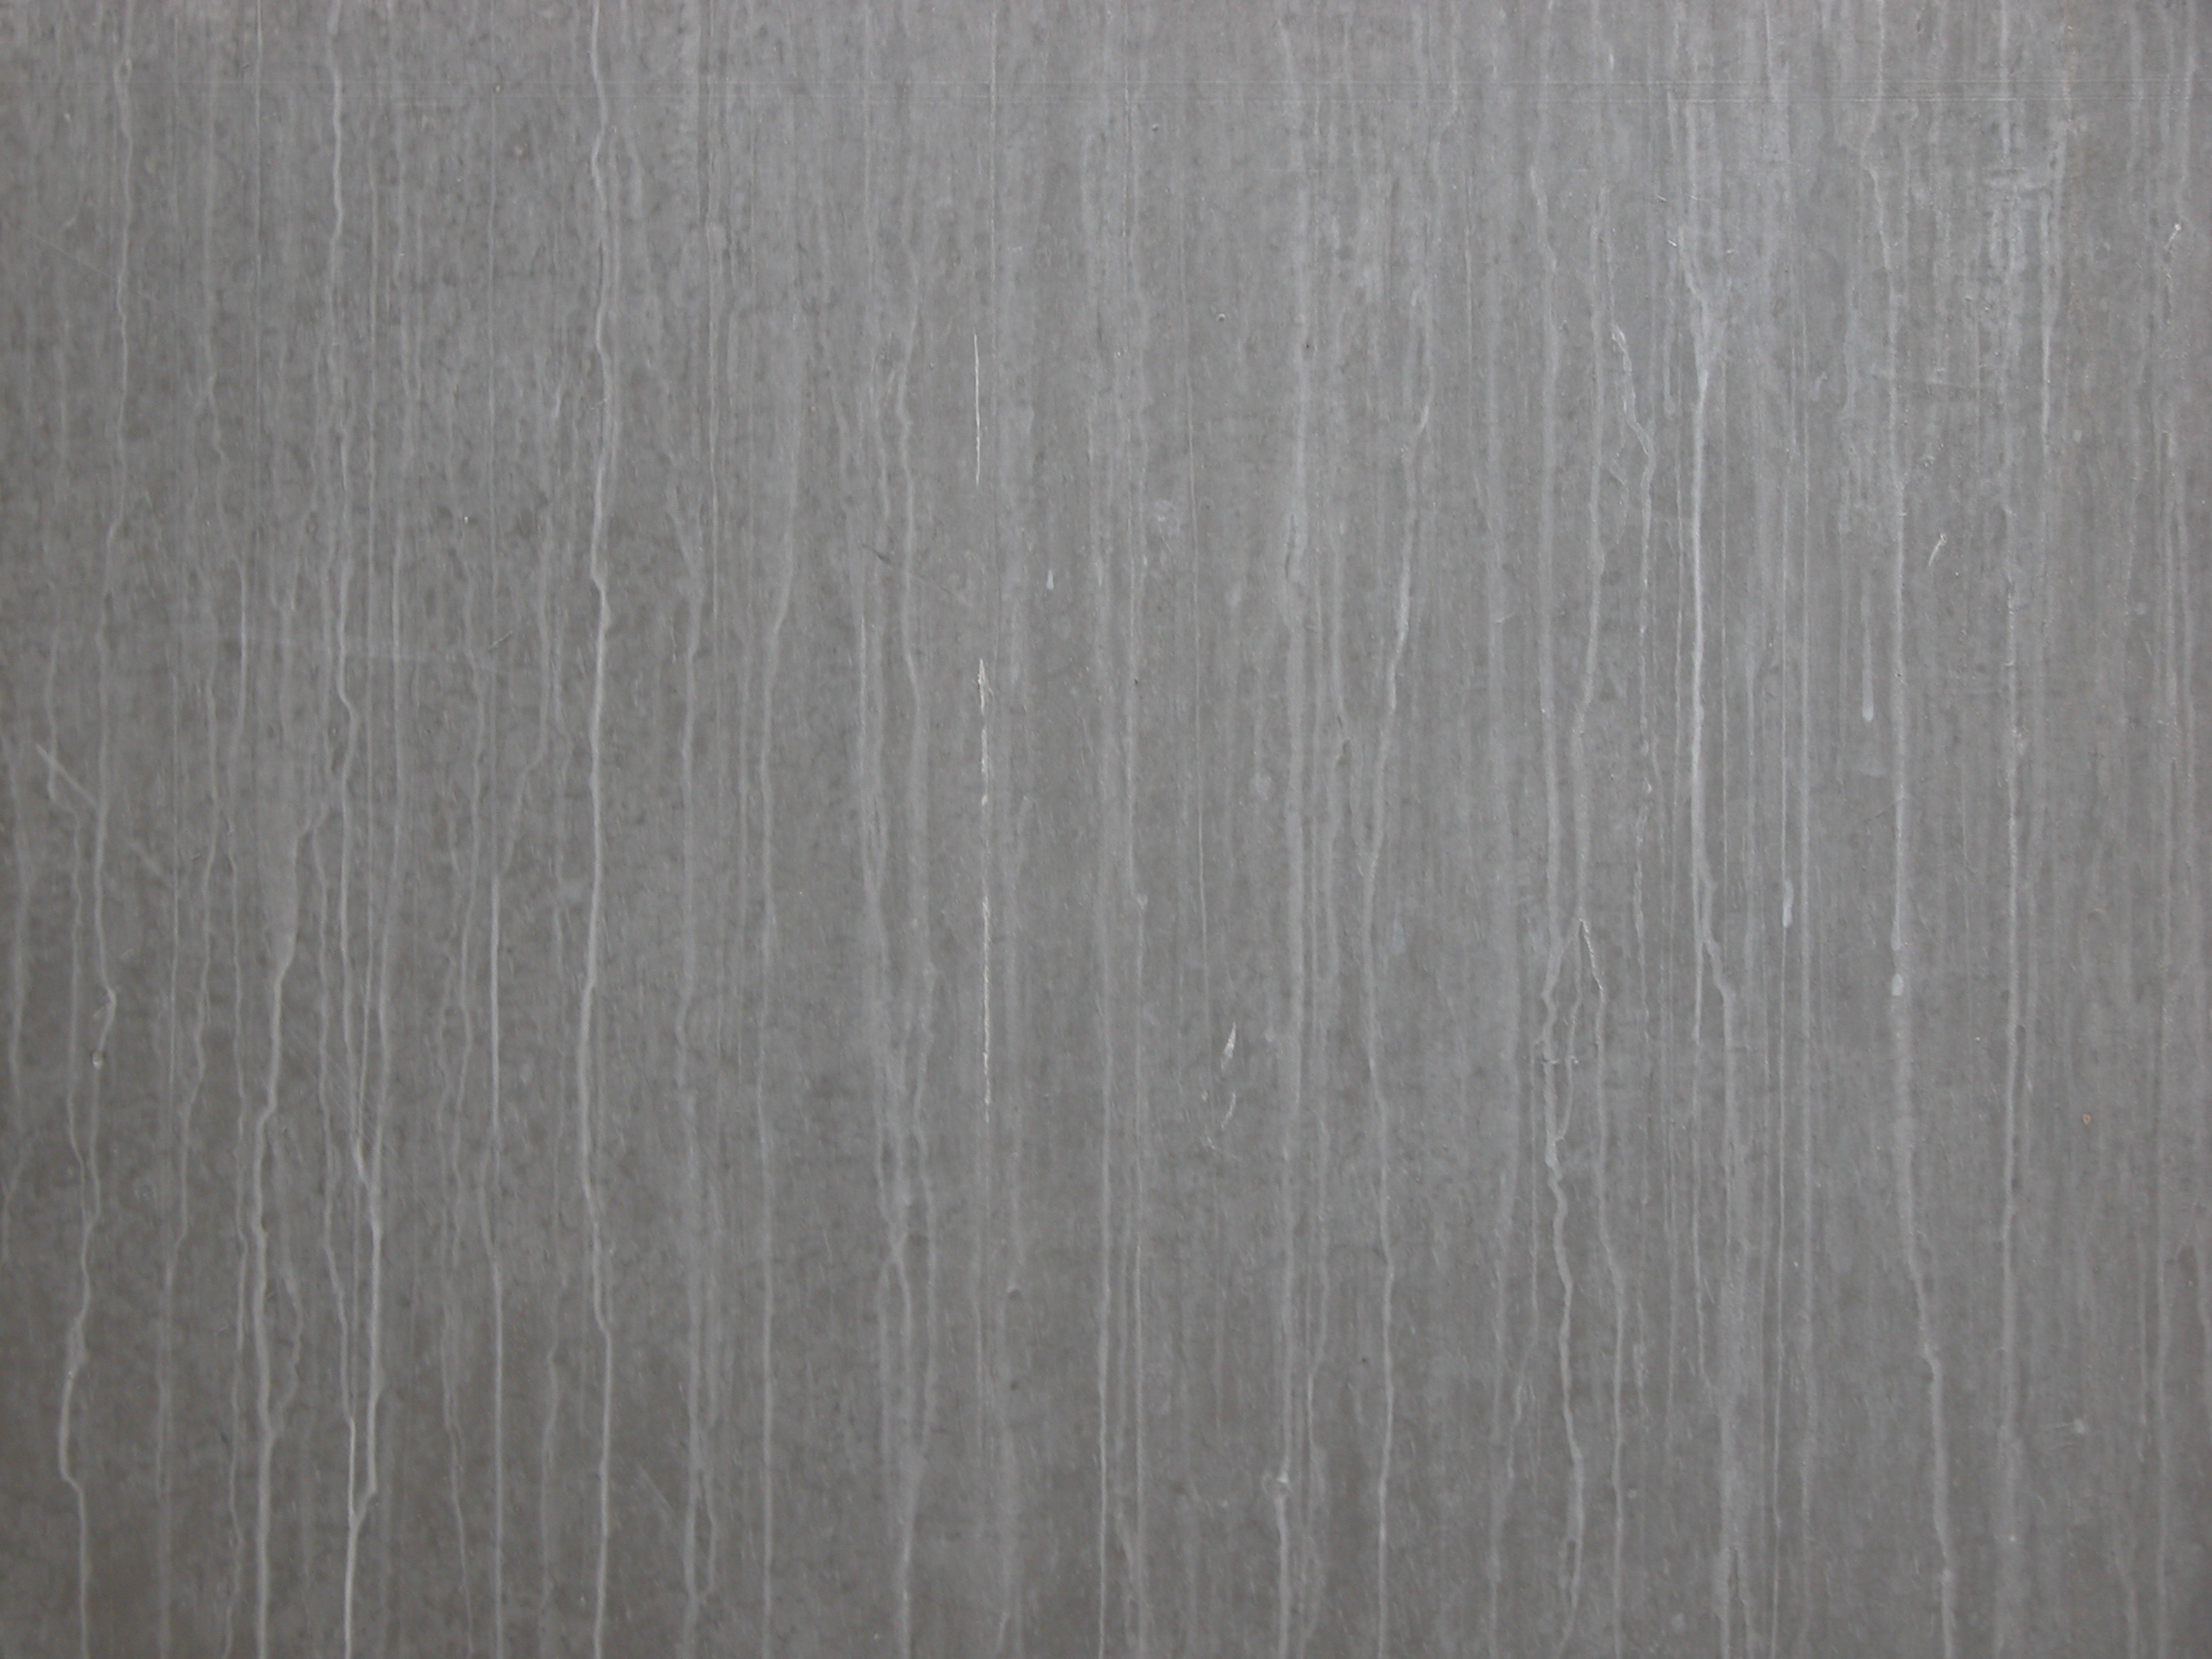 walls texture concrete wet rain rainstripes stripes striped drip drips water